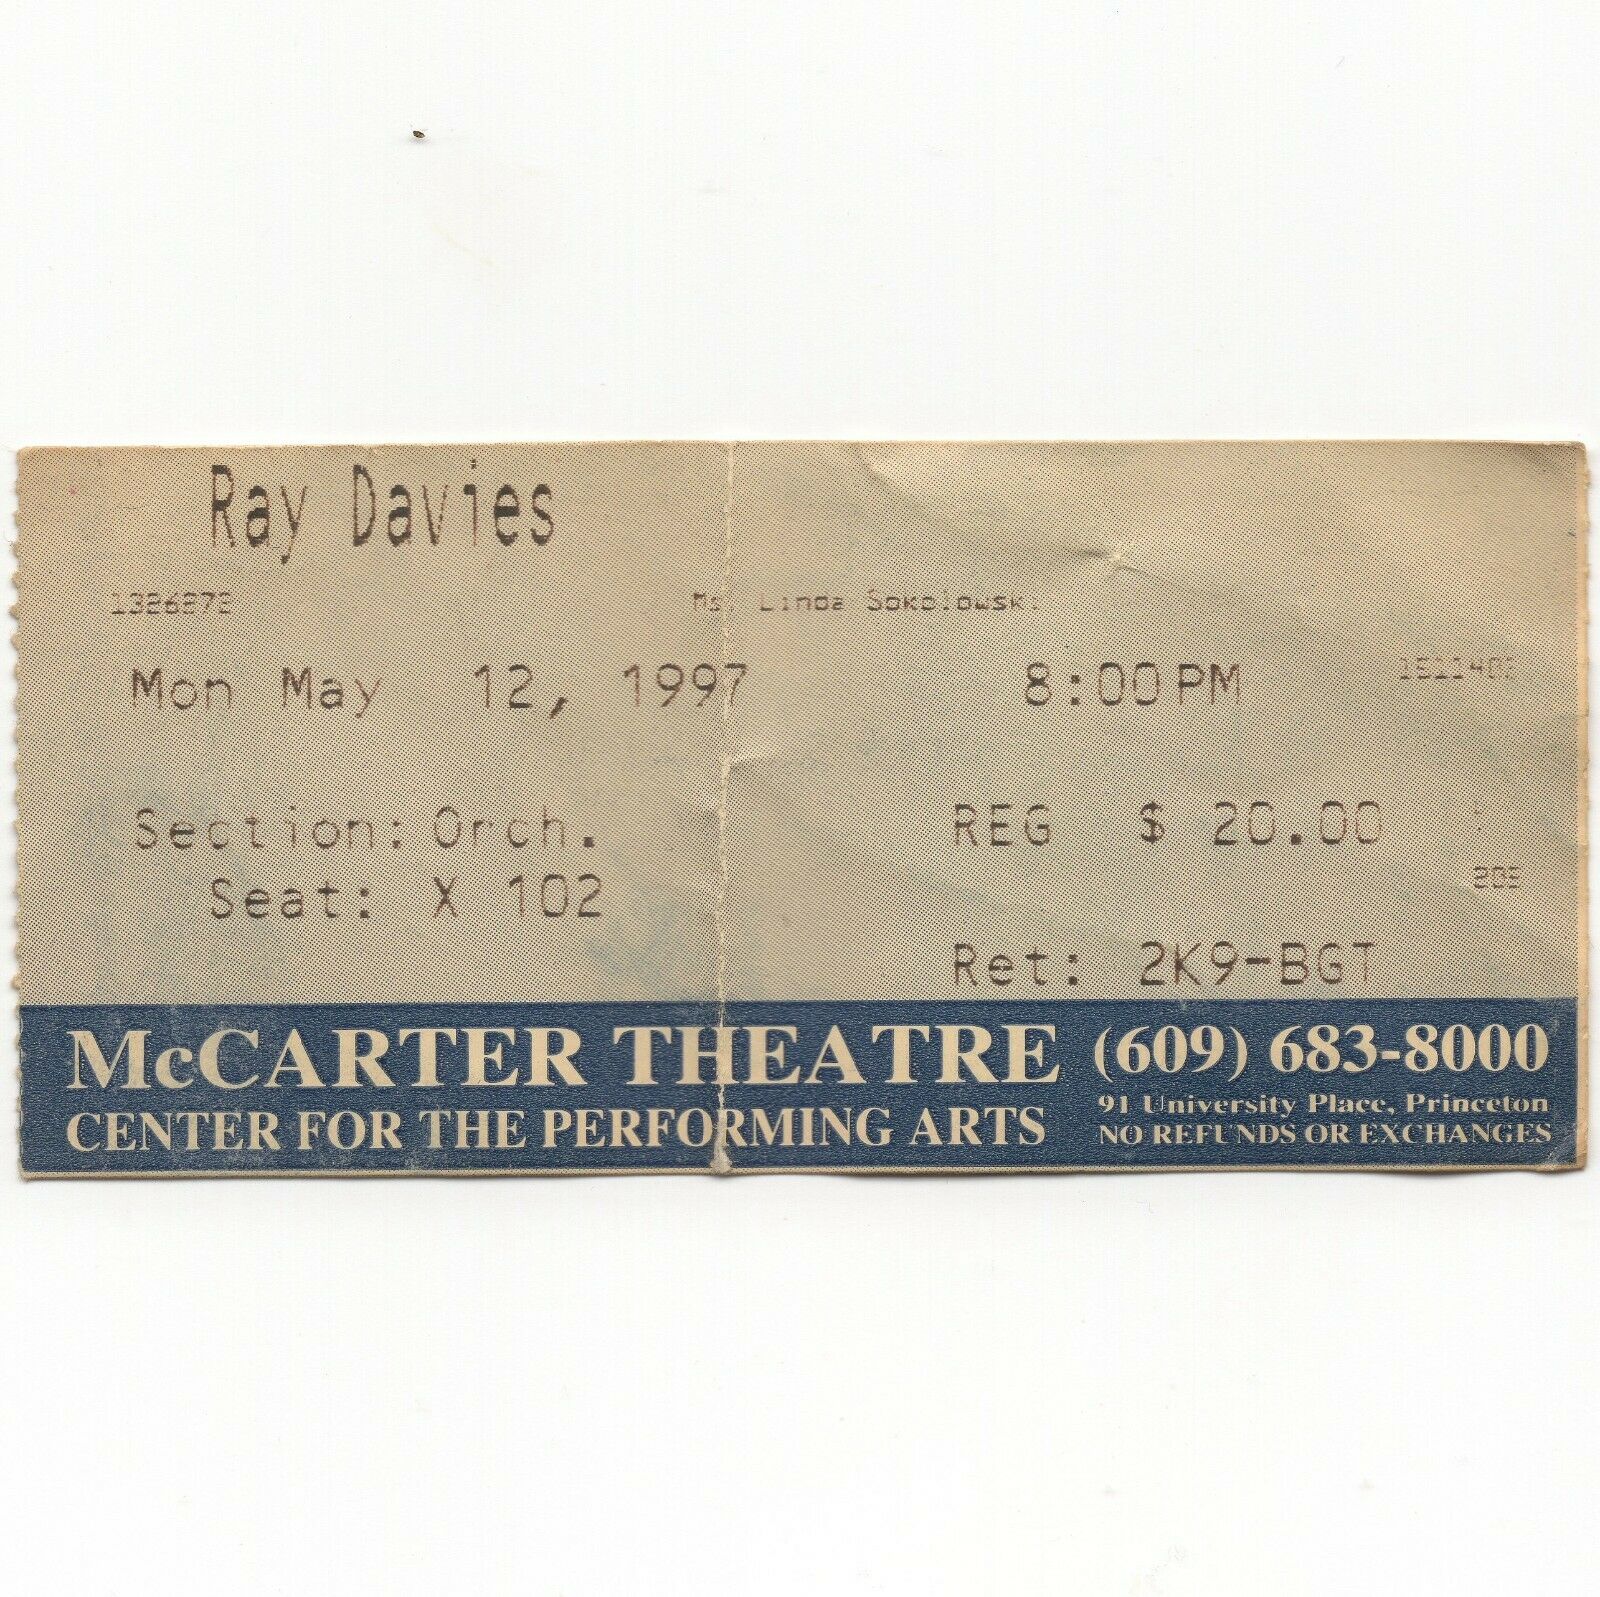 RAY DAVIES Concert Ticket Stub PRINCETON NJ 5/12/97 McCARTER THEATRE THE KINKS